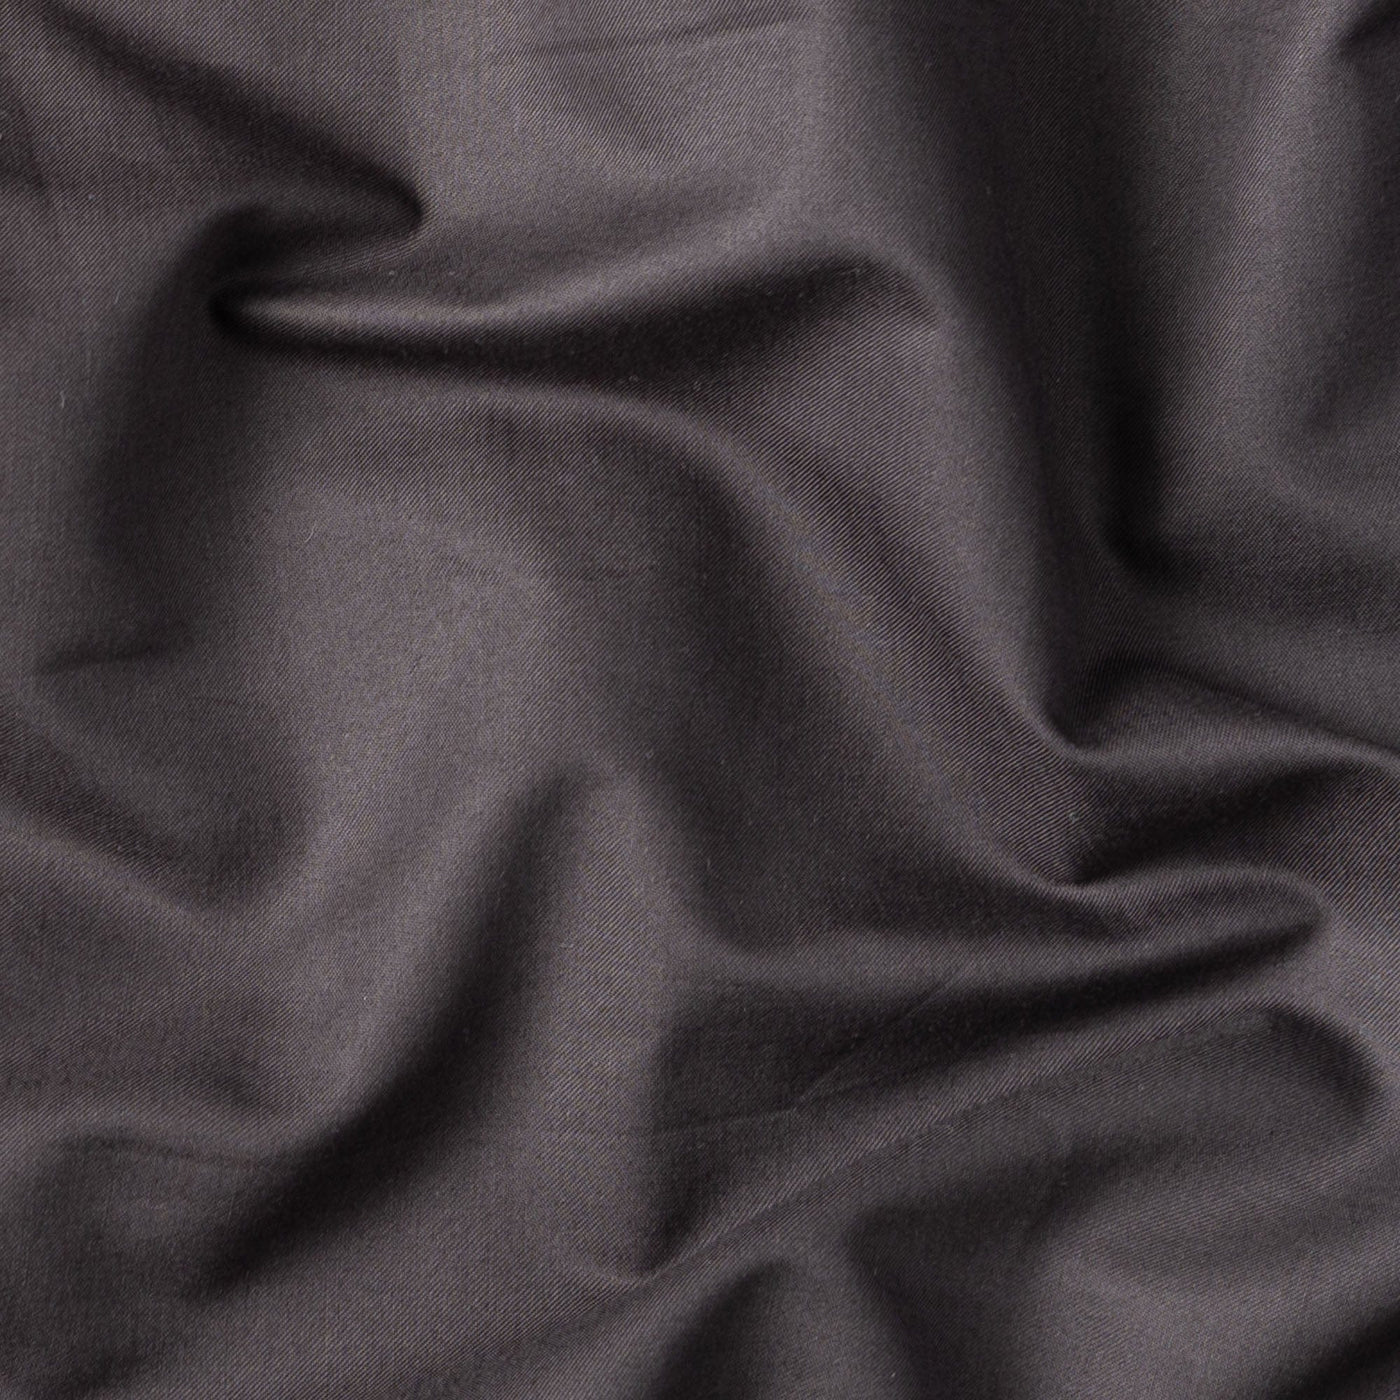 Fabric Pandit Shirt Dark Grey Premium Egyptian Giza Cotton Unstitched Men's Shirt Piece (Width 60 inch | 1.60 Meters)